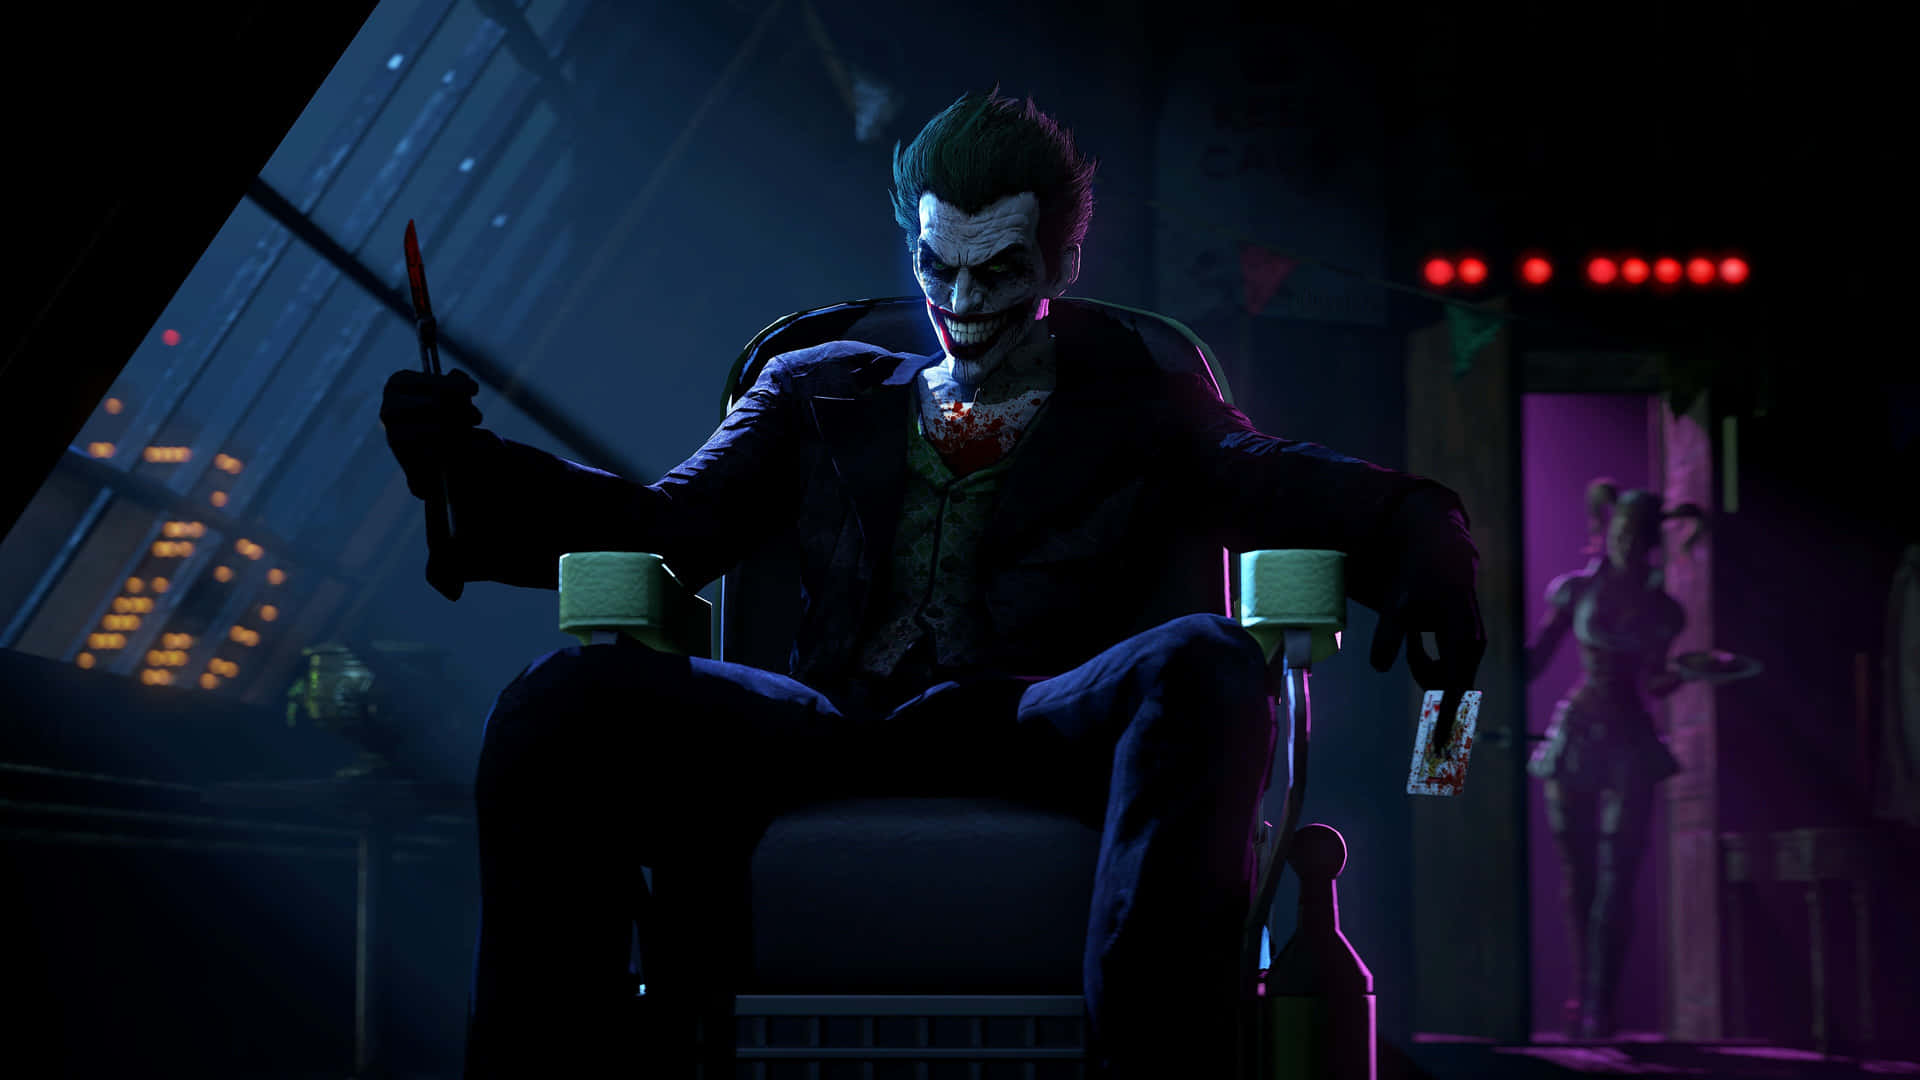 4k Ultra Hd-spel Joker Batman: Arkham Origins Wallpaper